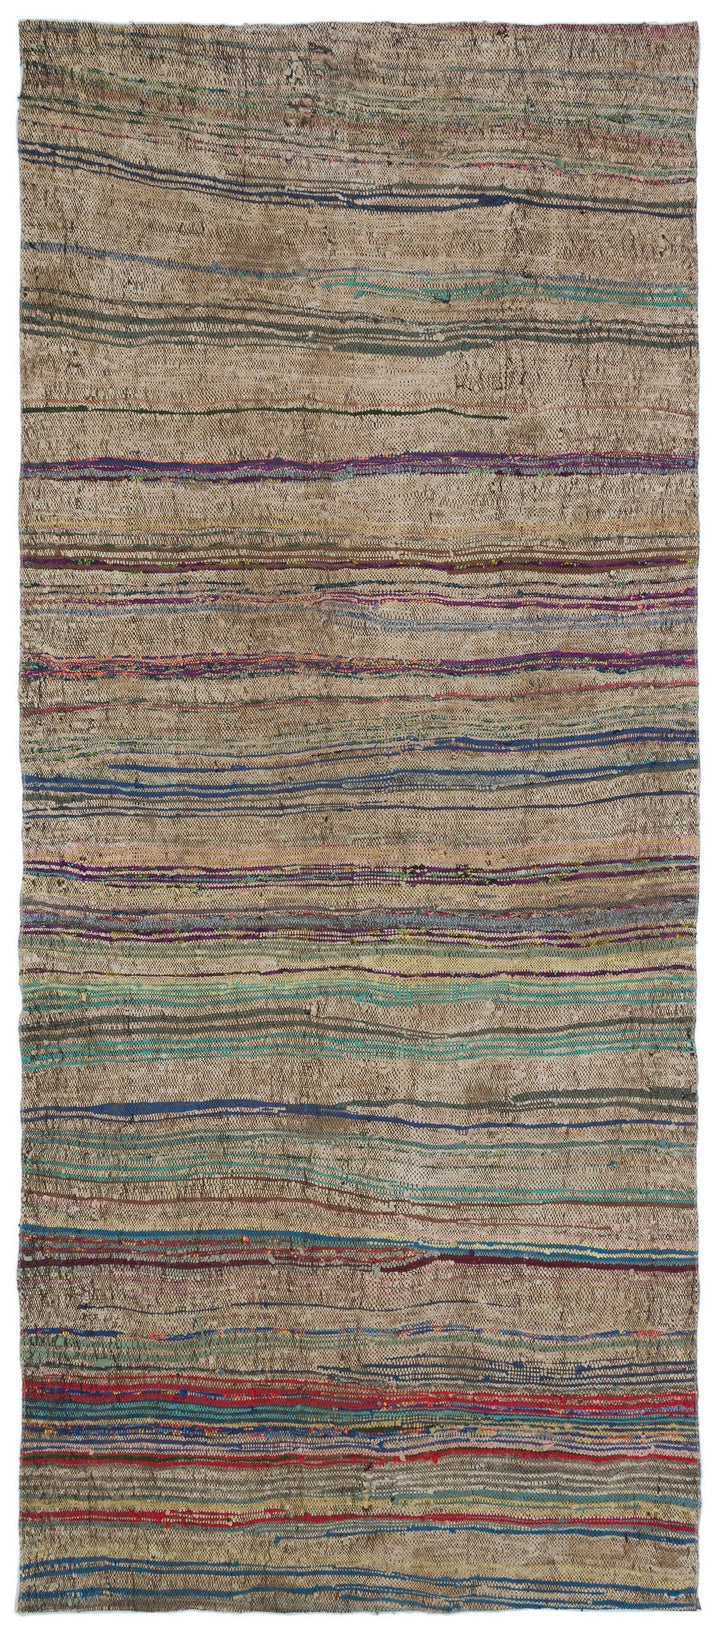 Cretan Beige Striped Wool Hand-Woven Carpet 143 x 340